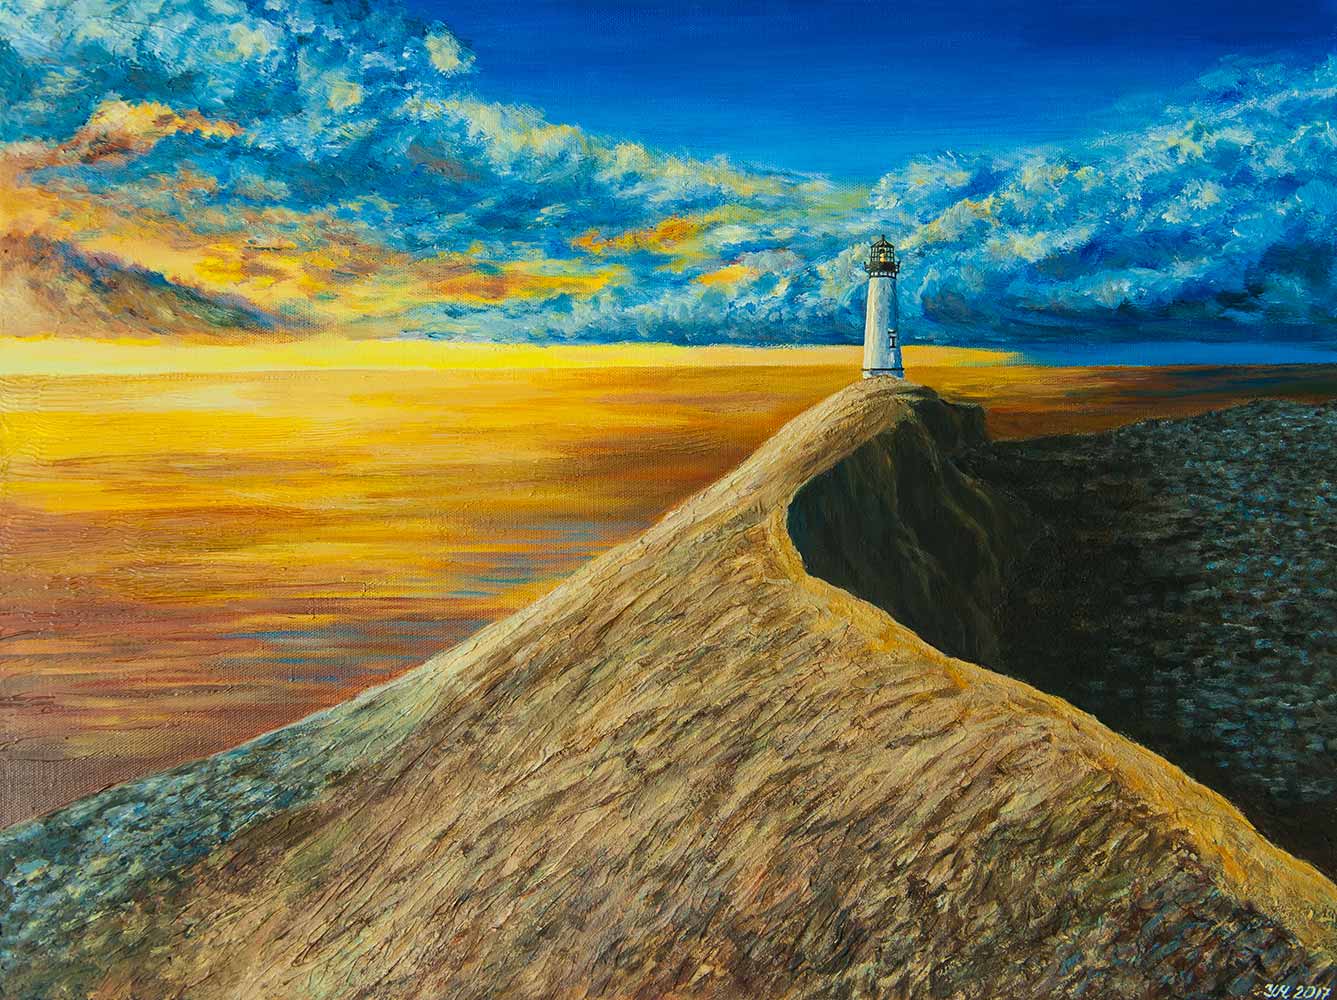 Buy painting online Singapore Exquisite Art Yulia McGrath Lighthouse